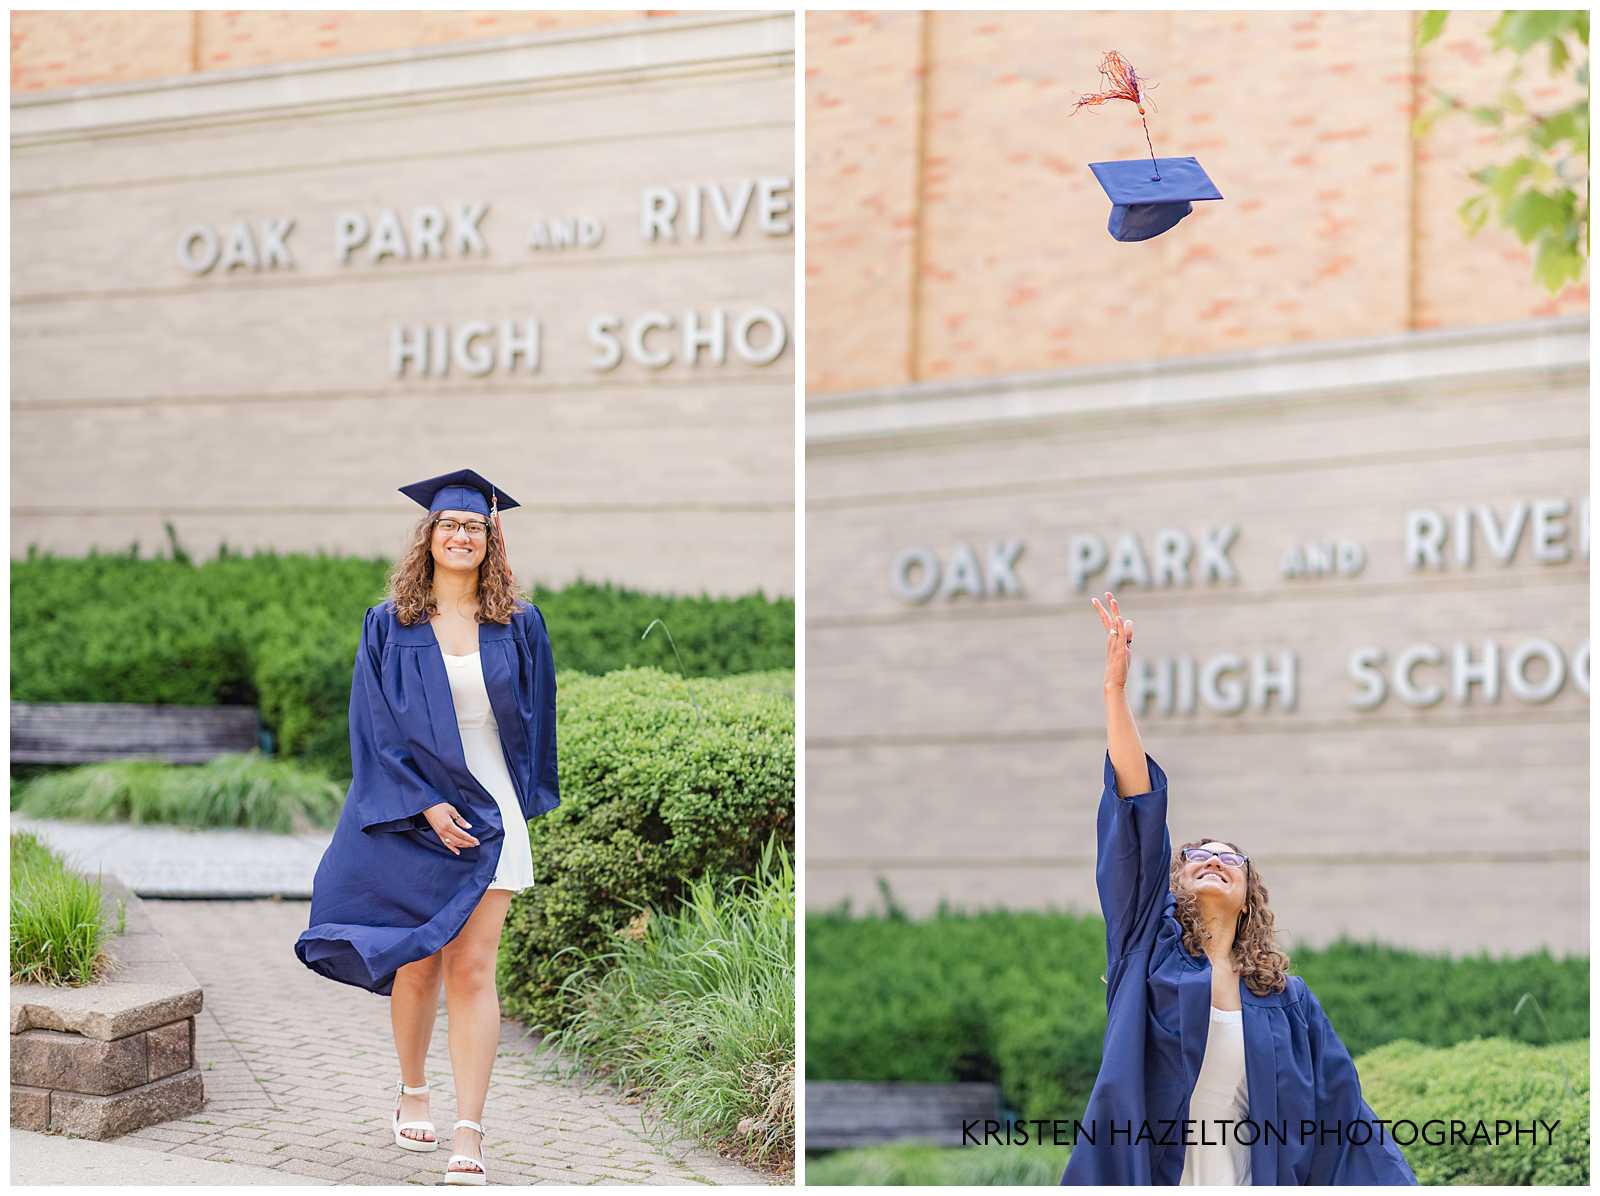 OPRFHS Senior Photos of a female graduate throwing her cap